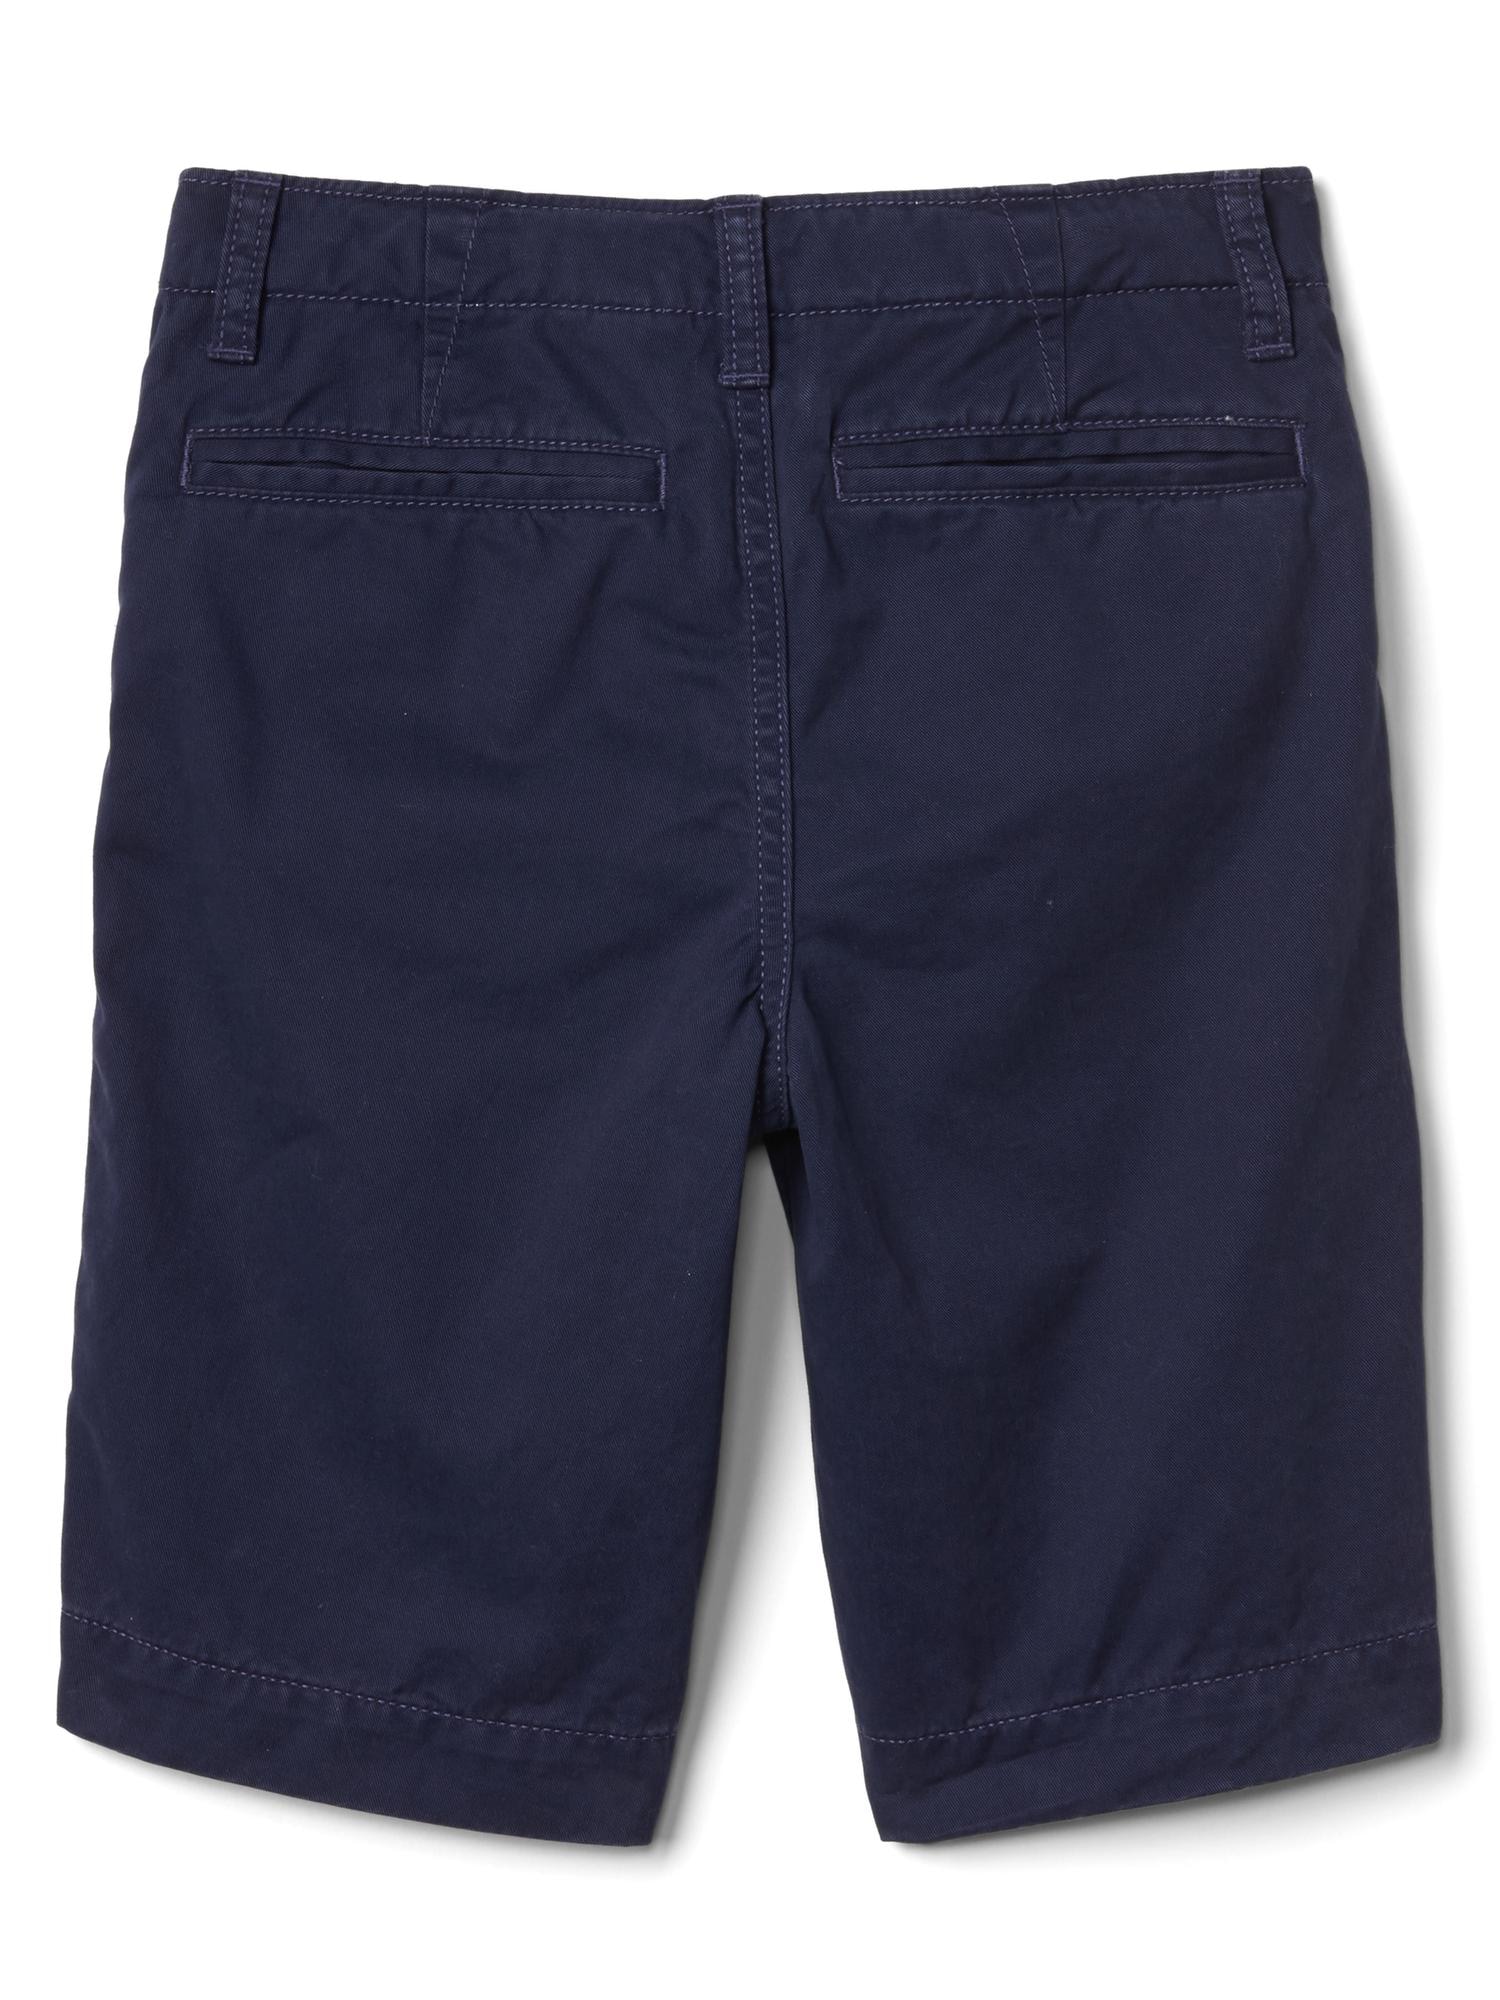 Twill flat front shorts | Gap